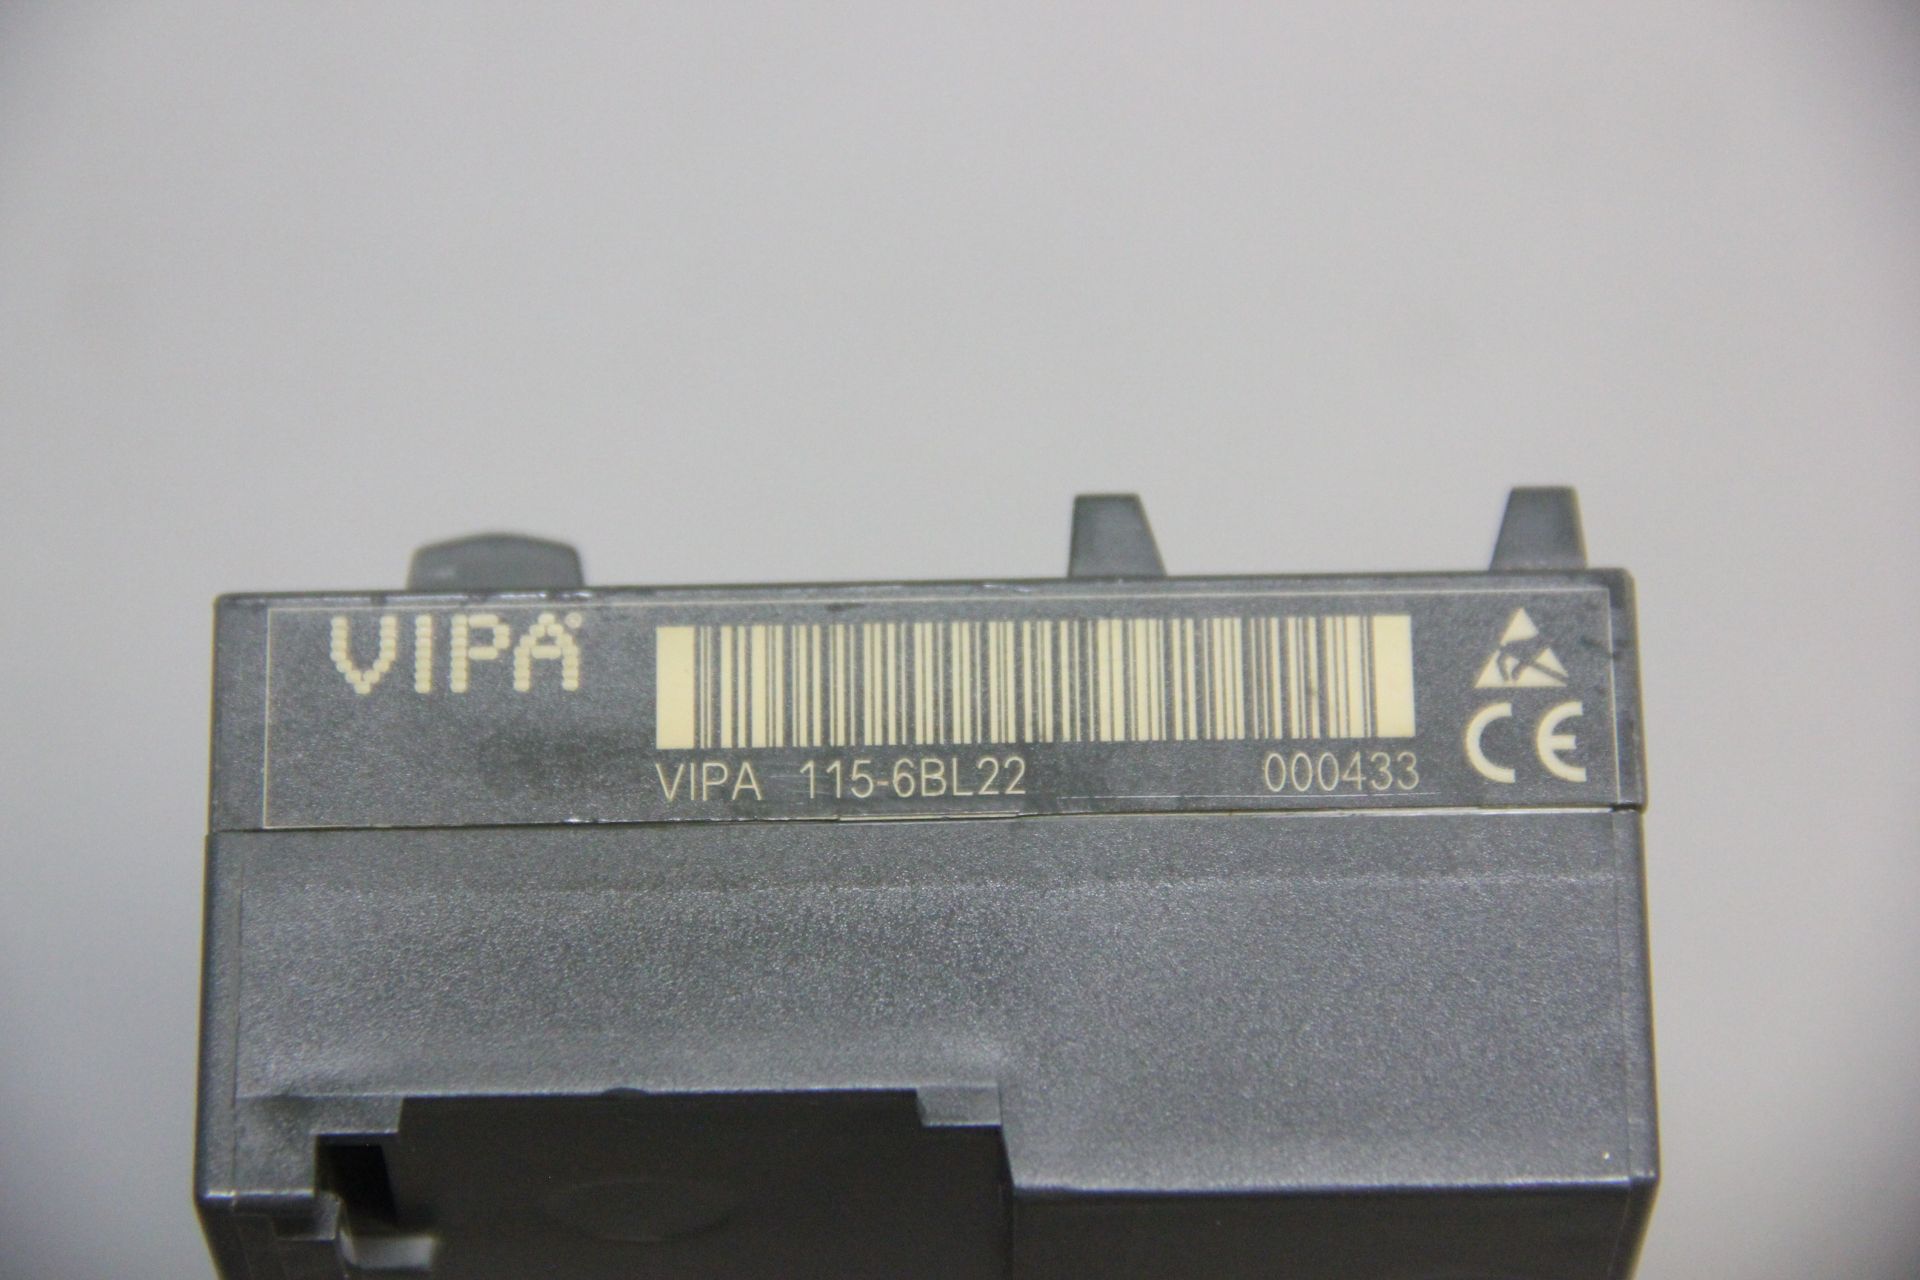 SIEMENS VIPA CPU MODULE - Image 3 of 5